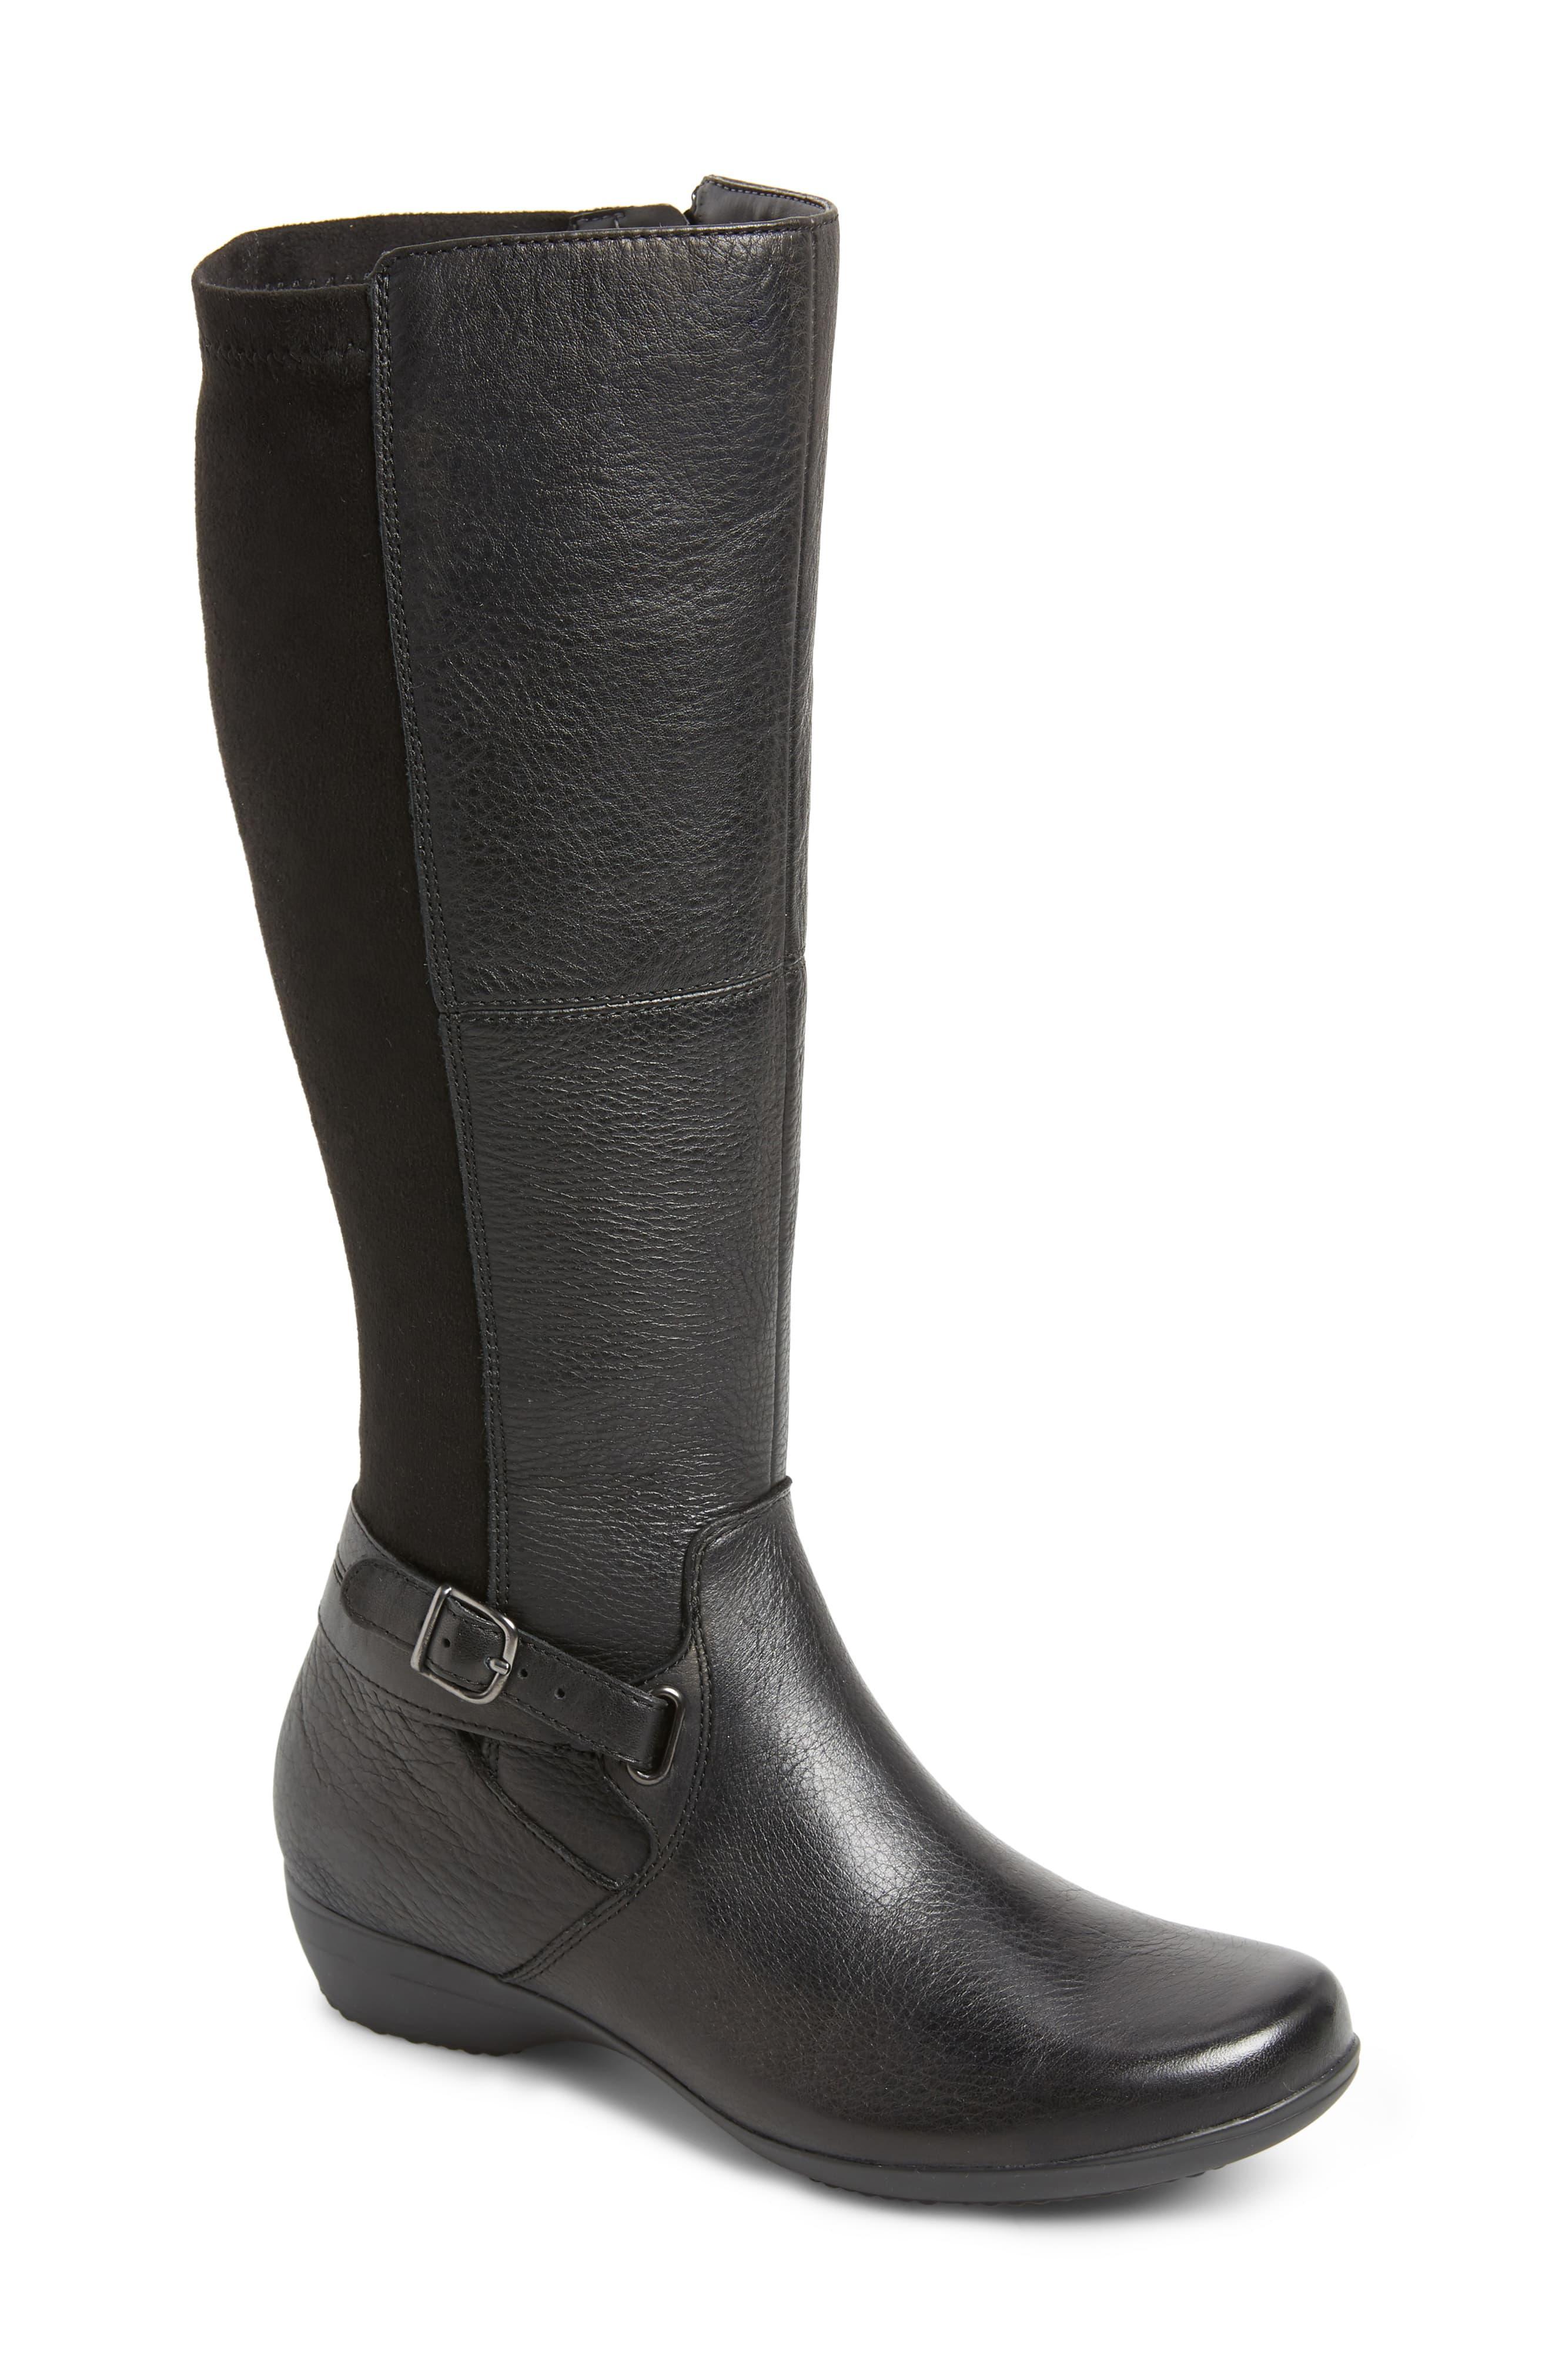 Dansko Francesca Knee High Riding Boot in Black | Lyst